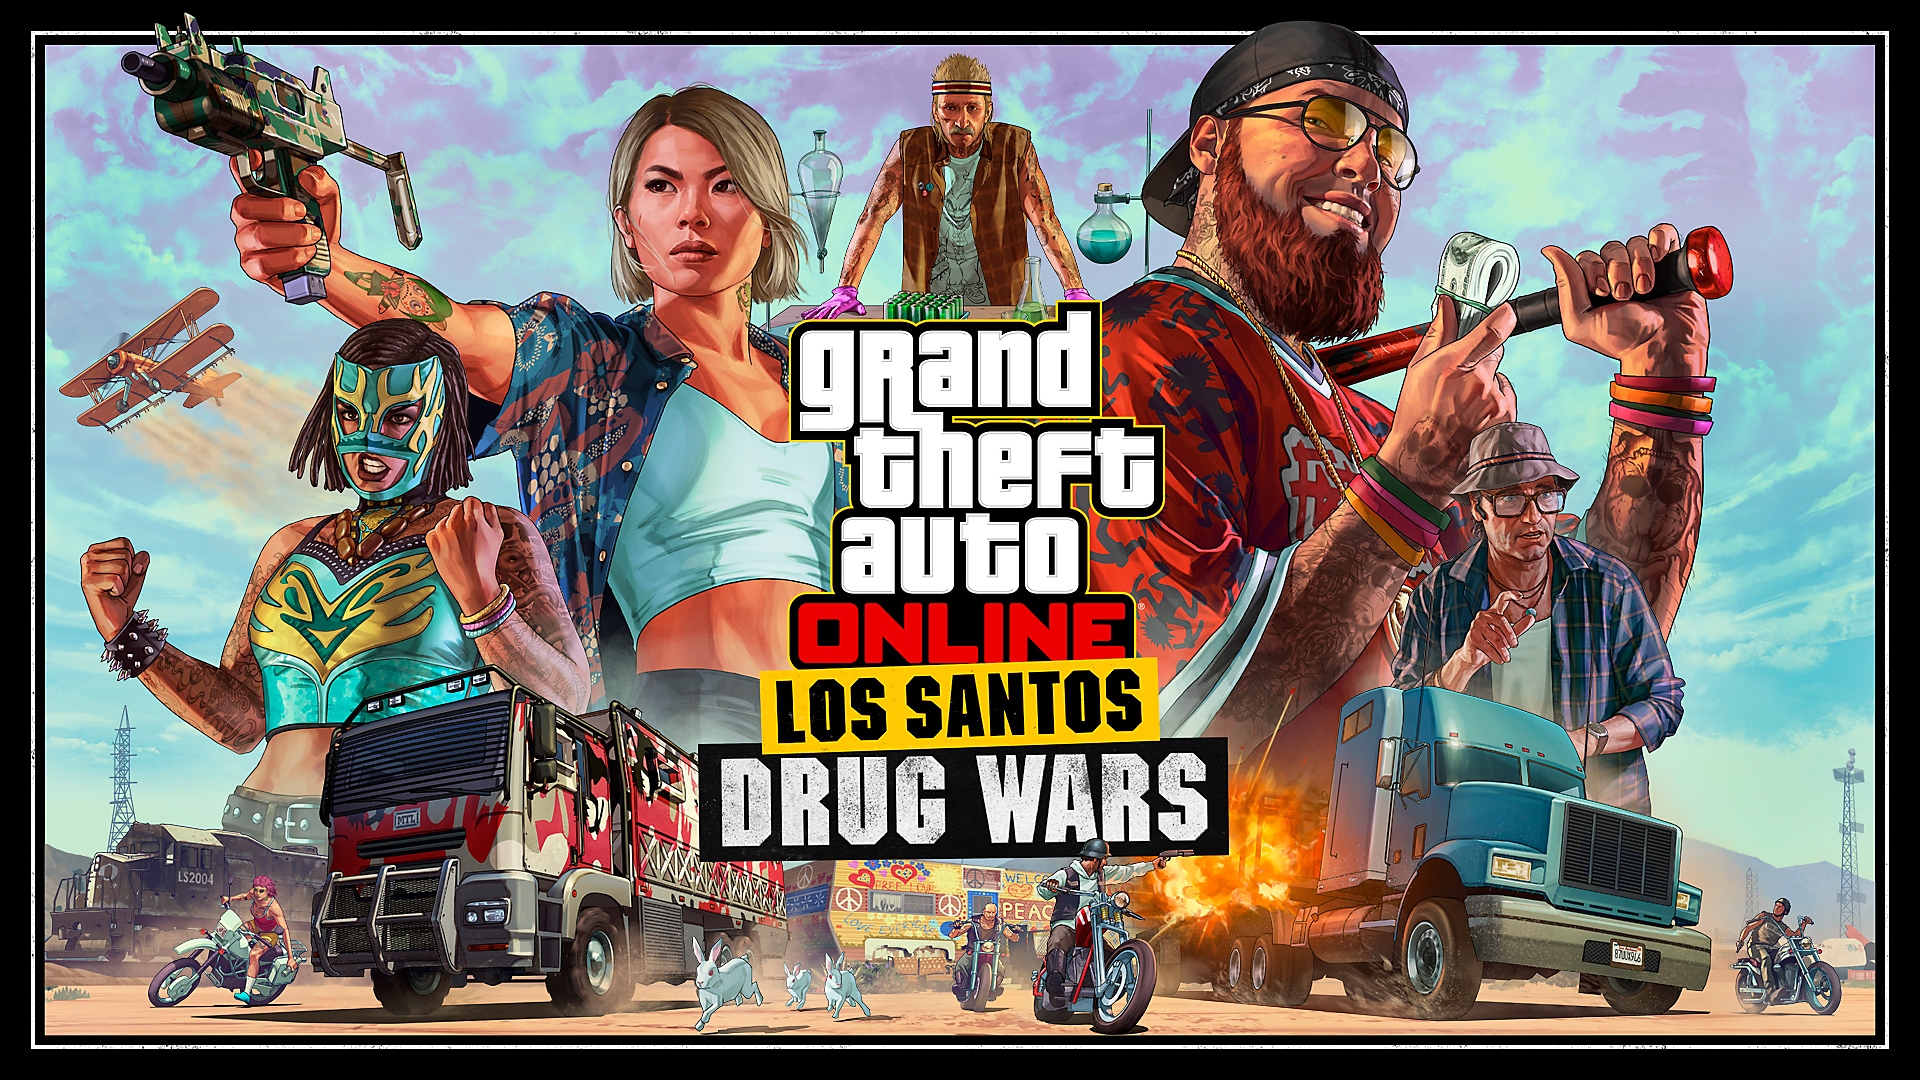 《Grand Theft Auto線上模式》- 《洛聖都Drug Wars》預告片